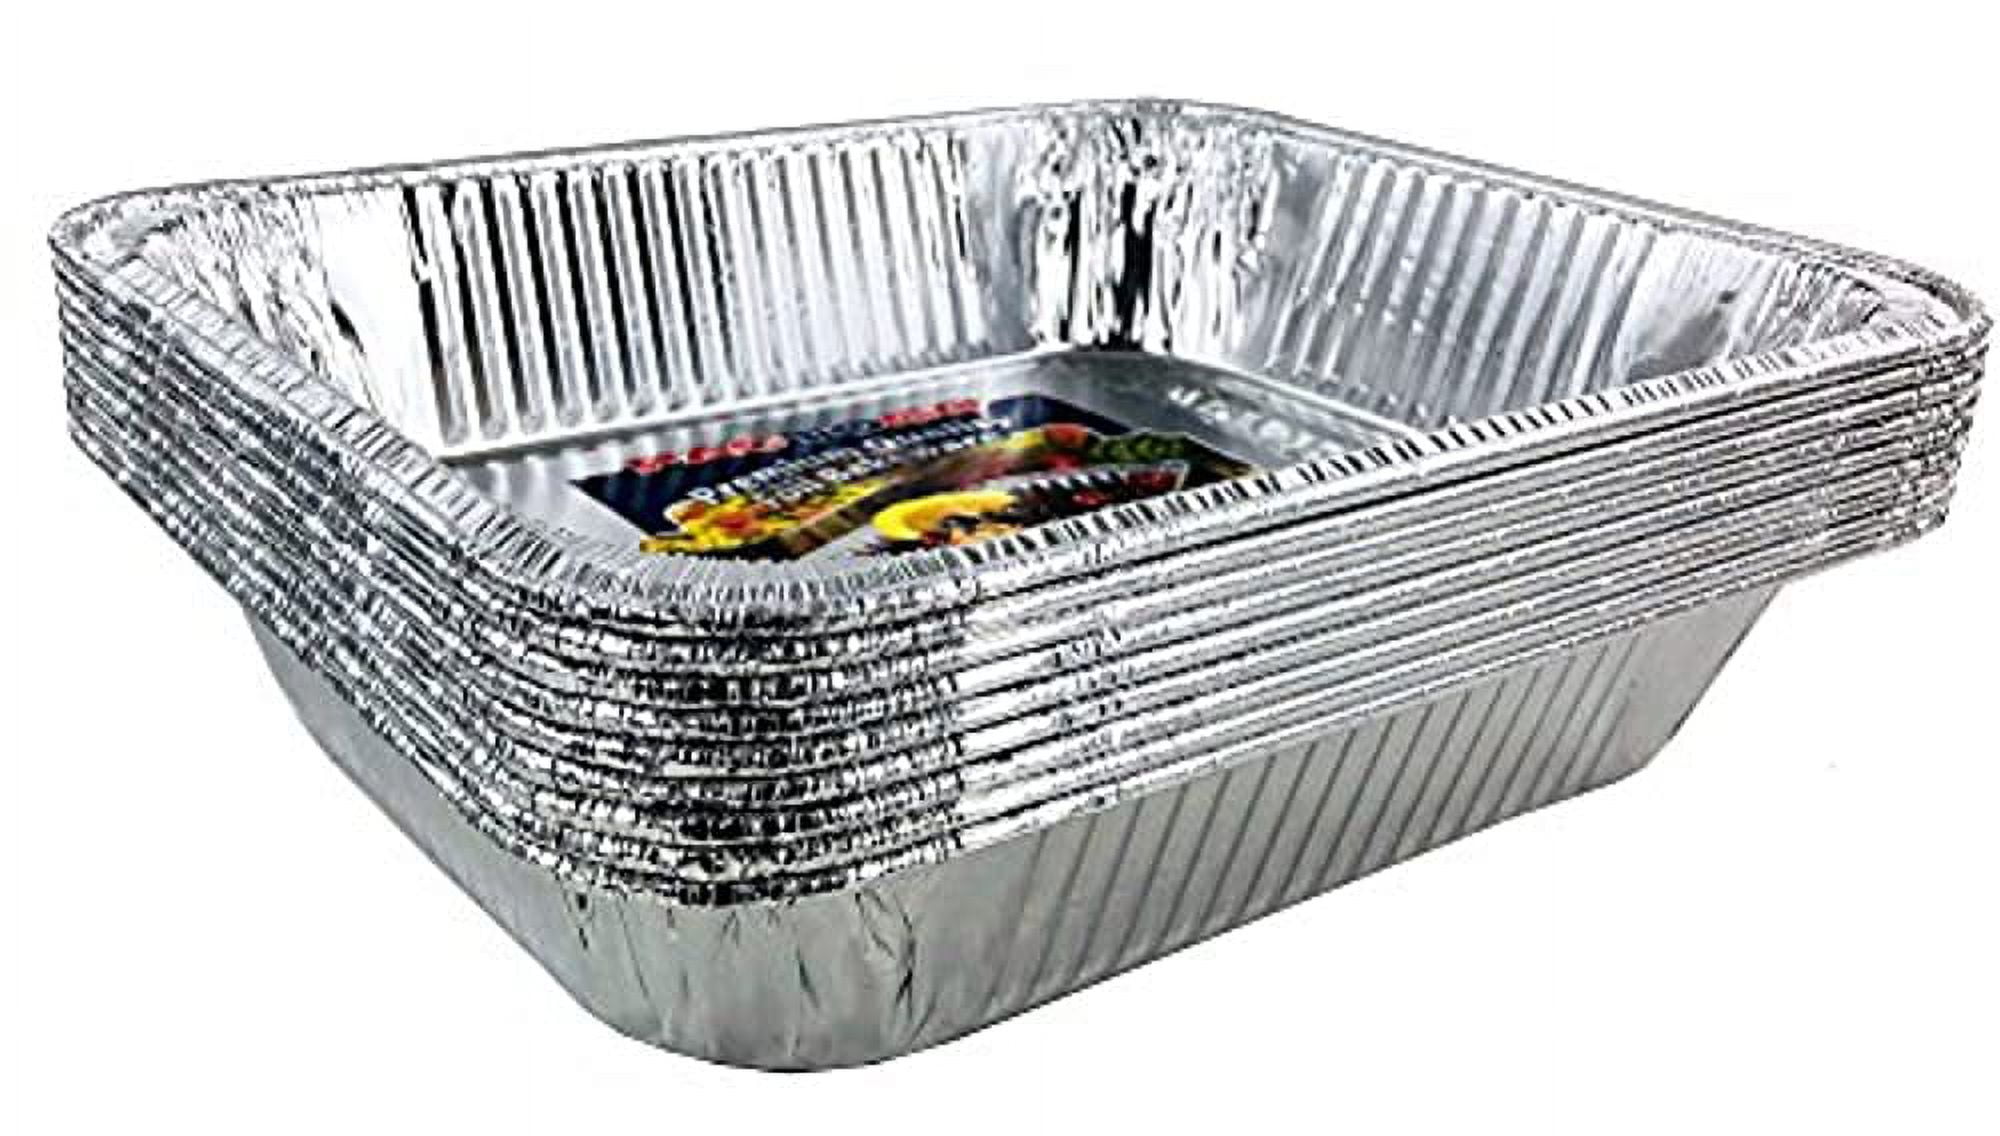 Large Rectangular Disposable Aluminum Foil Steam Table Baking Roast Pans with Flat Lids Half Size 13 x 10 25 Pack